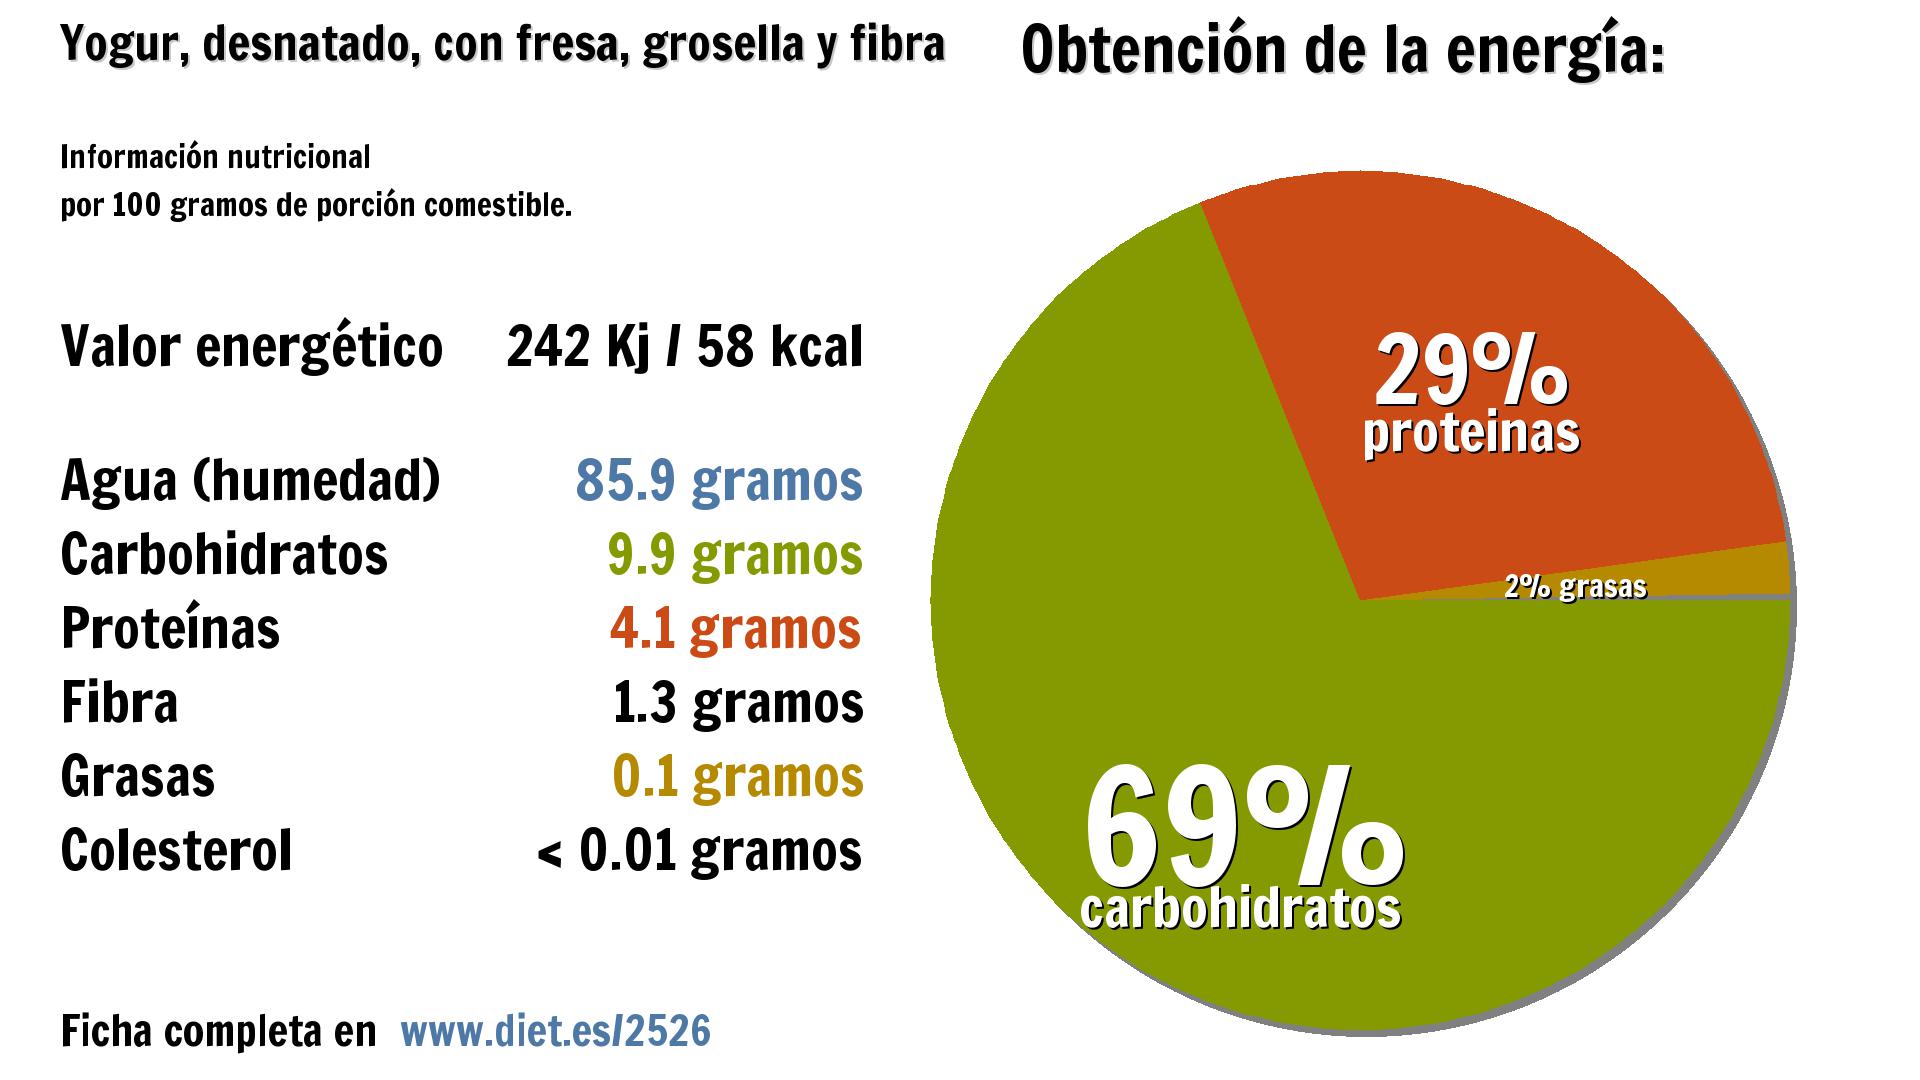 Yogur, desnatado, con fresa, grosella y fibra: energía 242 Kj, agua 86 g., carbohidratos 10 g., proteínas 4 g. y fibra 1 g.